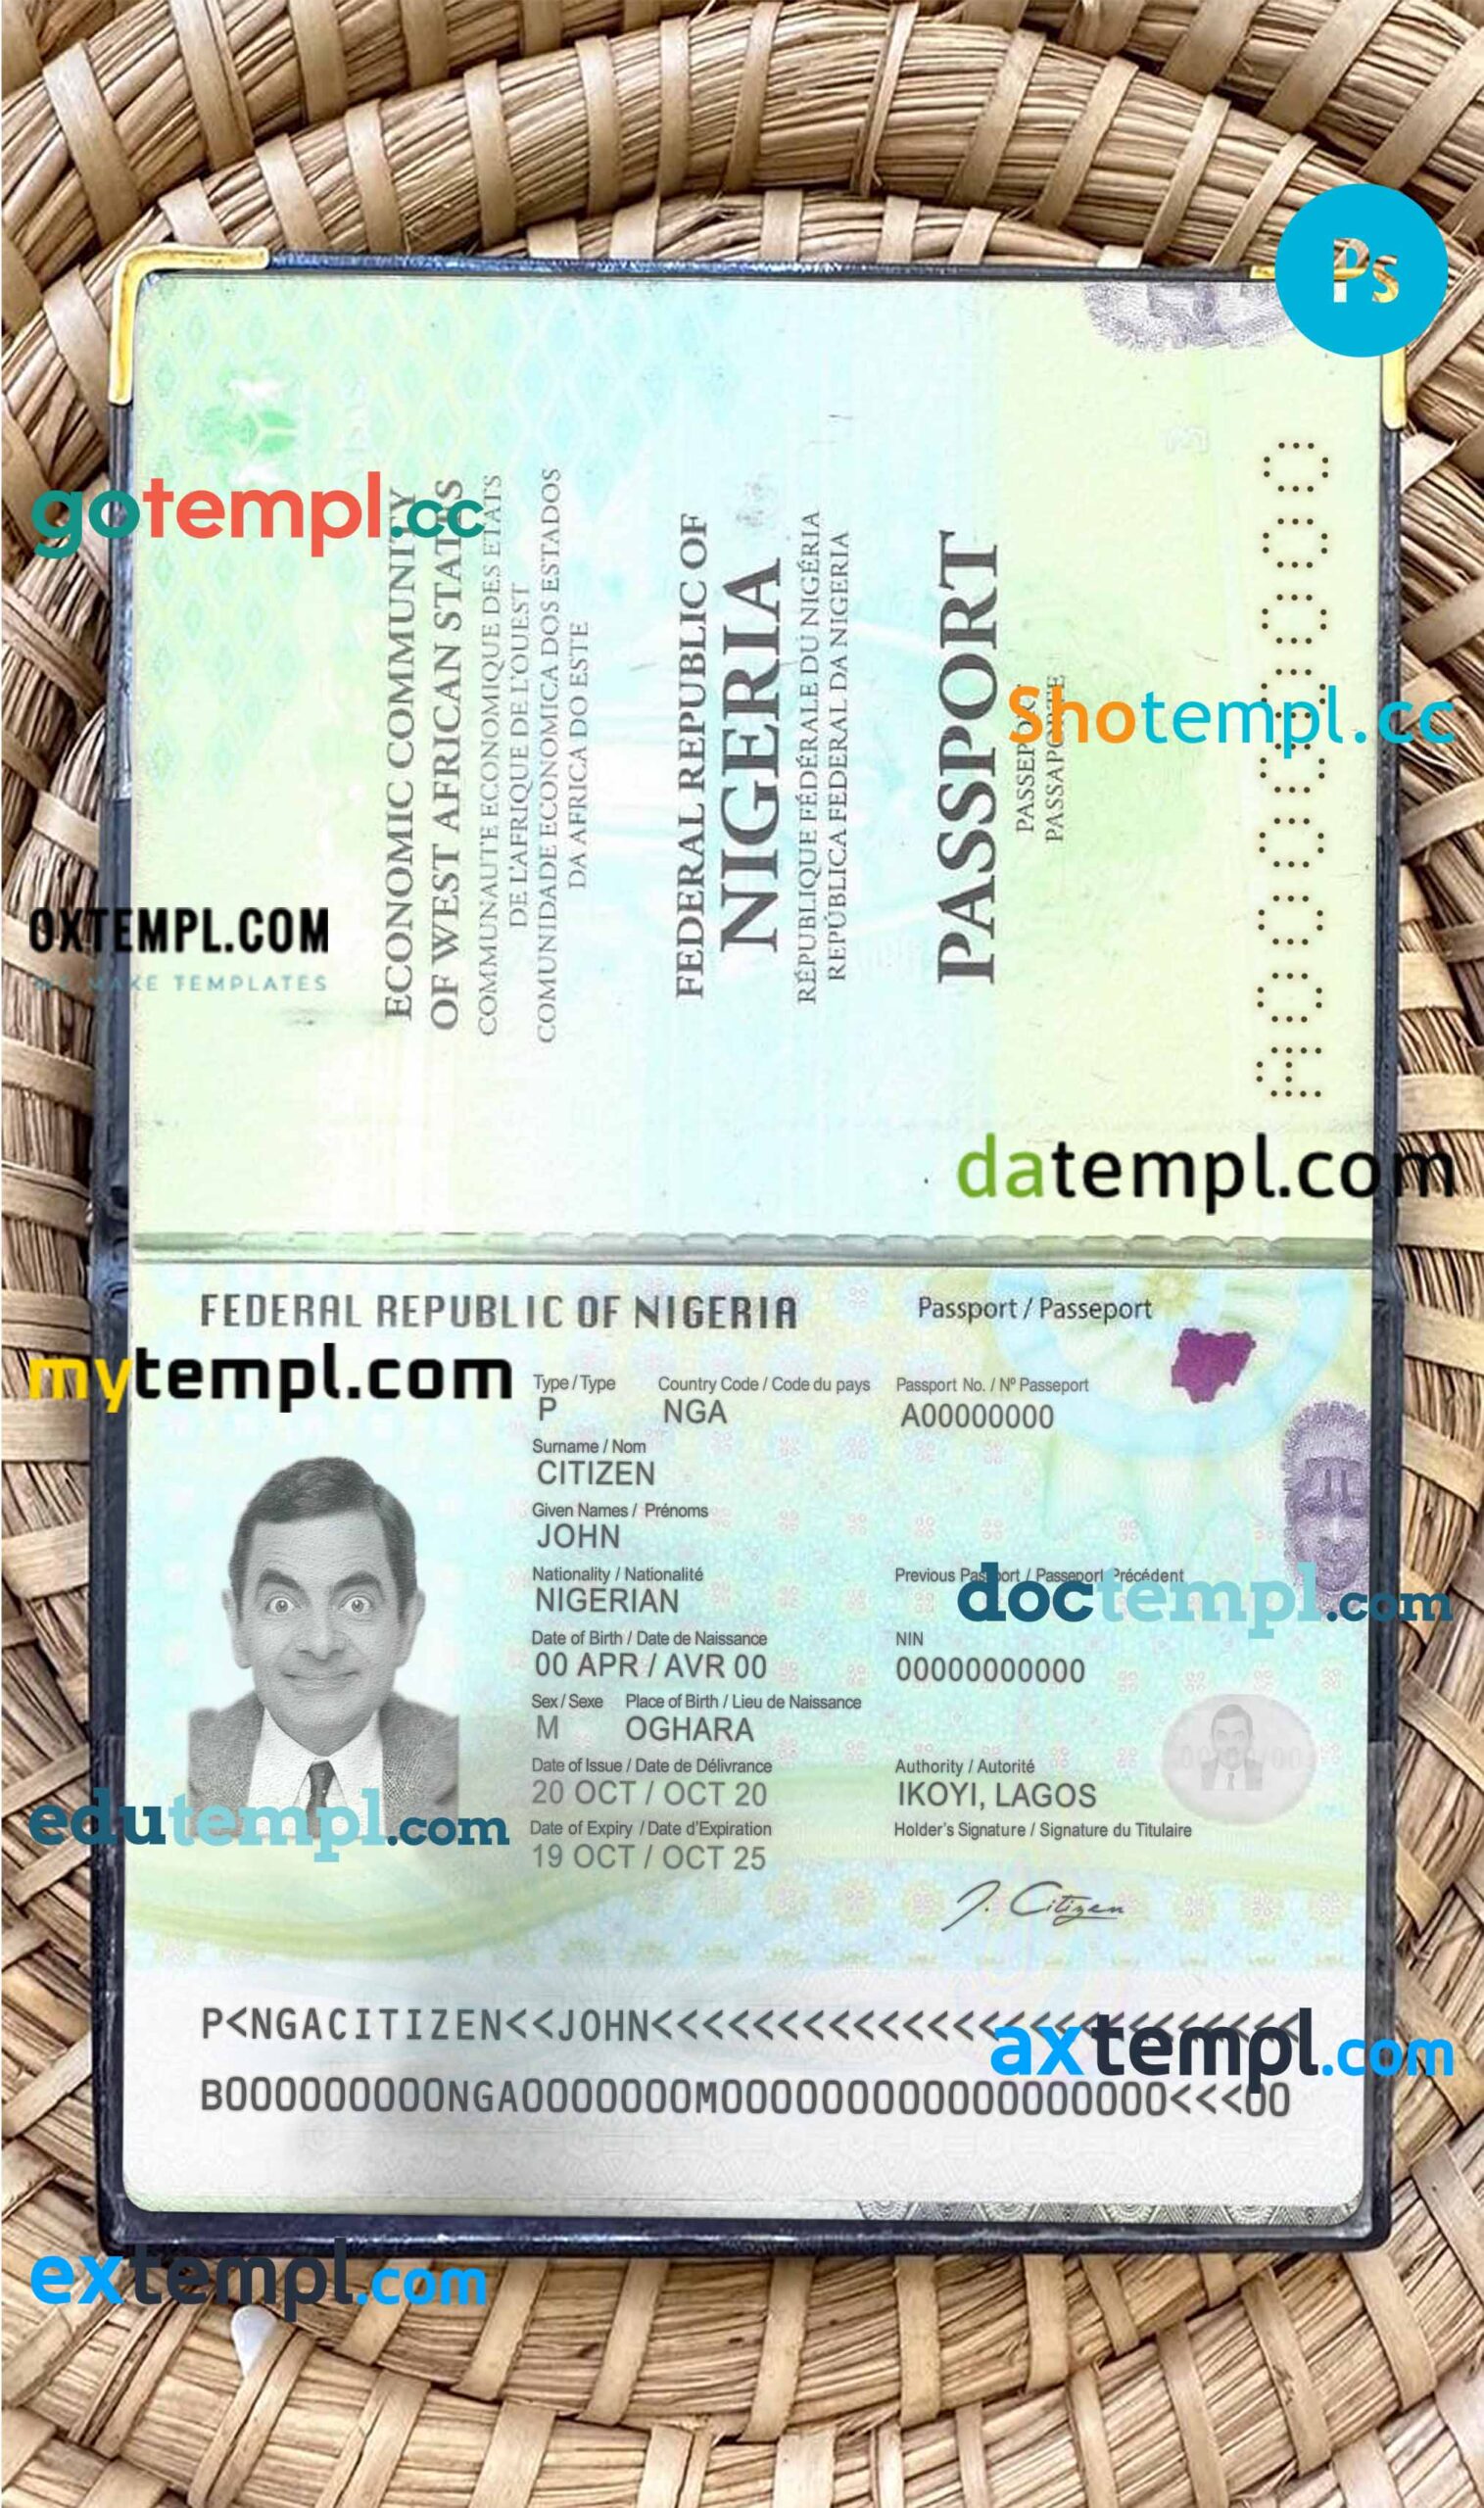 Moldova passport editable PSD files, scan and photo taken image (2014-present), 2 in 1